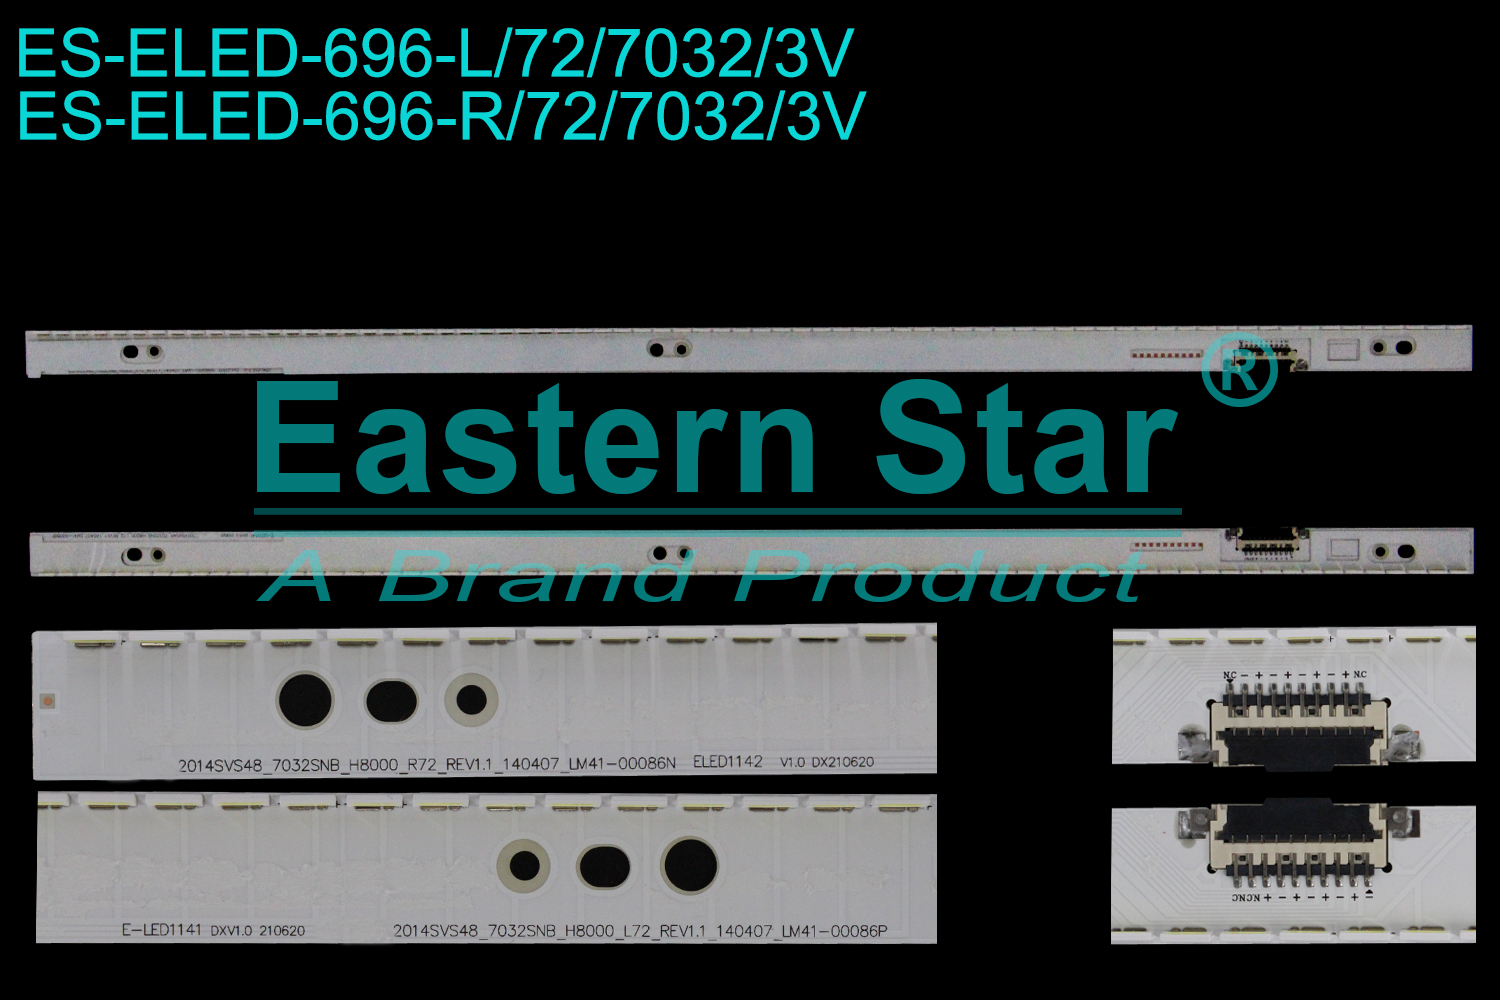 ES-ELED-696 ELED/EDGE TV backlight use for 48'' Samsung UE48H8000  L:2014SVS48_7032SNB_H8000_L72_REV1.1_140407_LM41-00086P  BN96-30655A   R:2014SVS48_7032SNB_H8000_R72_REV1.1_140407_LM41-00086N BN96-30654A  LED STRIPS(2)